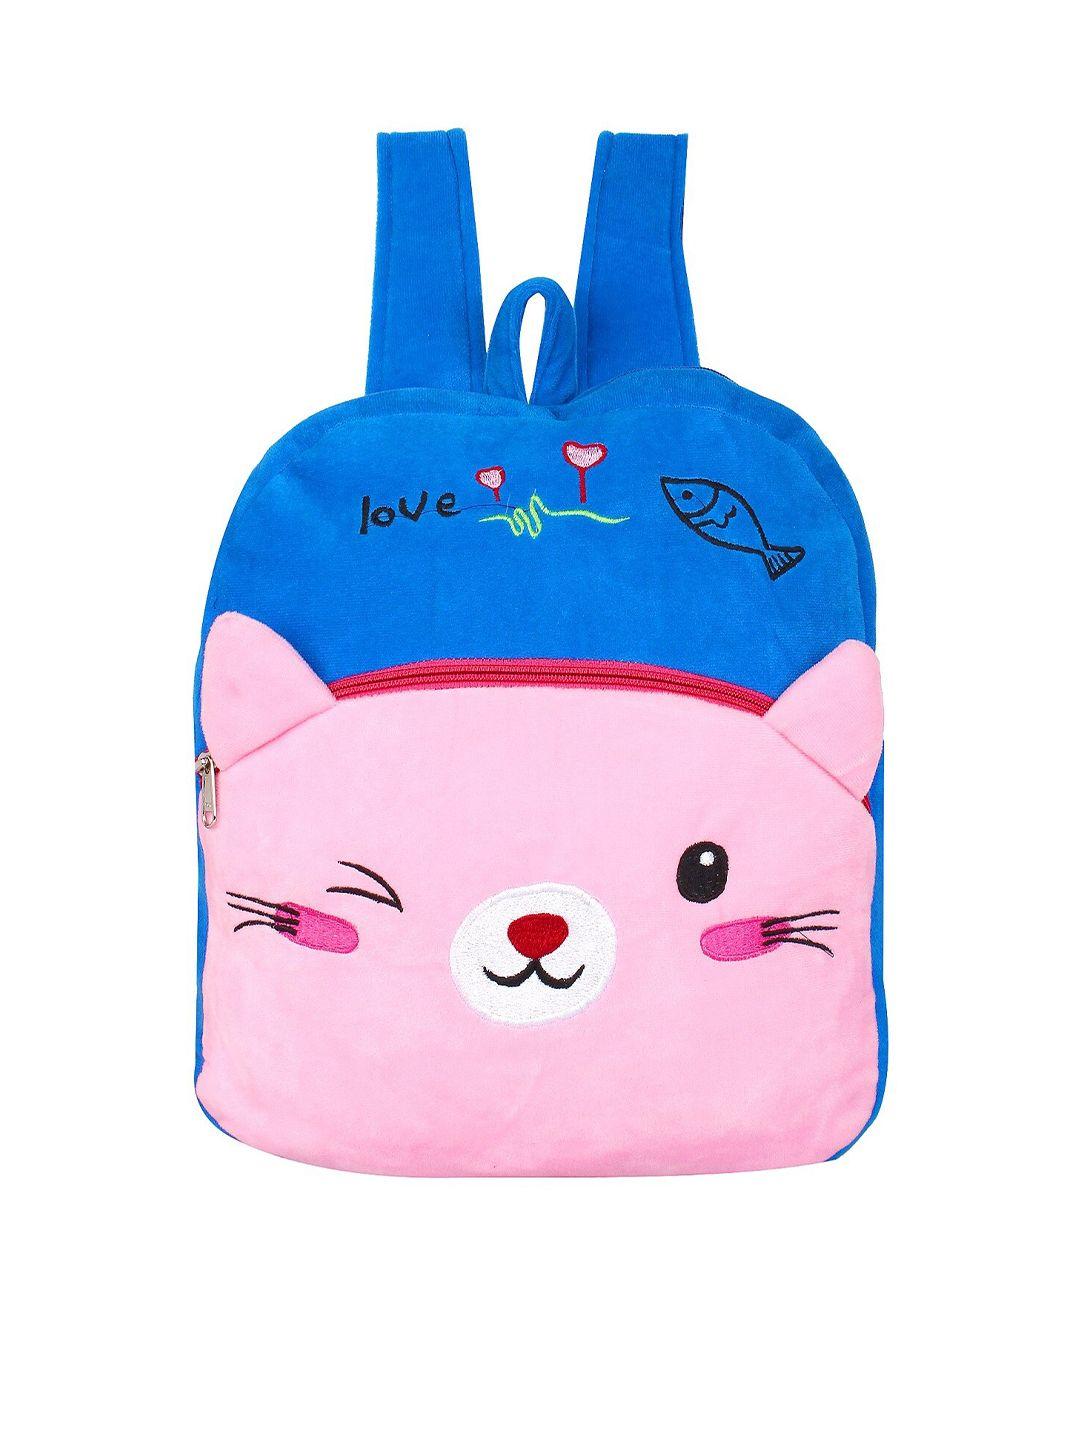 frantic unisex kids pink & blue graphic backpack